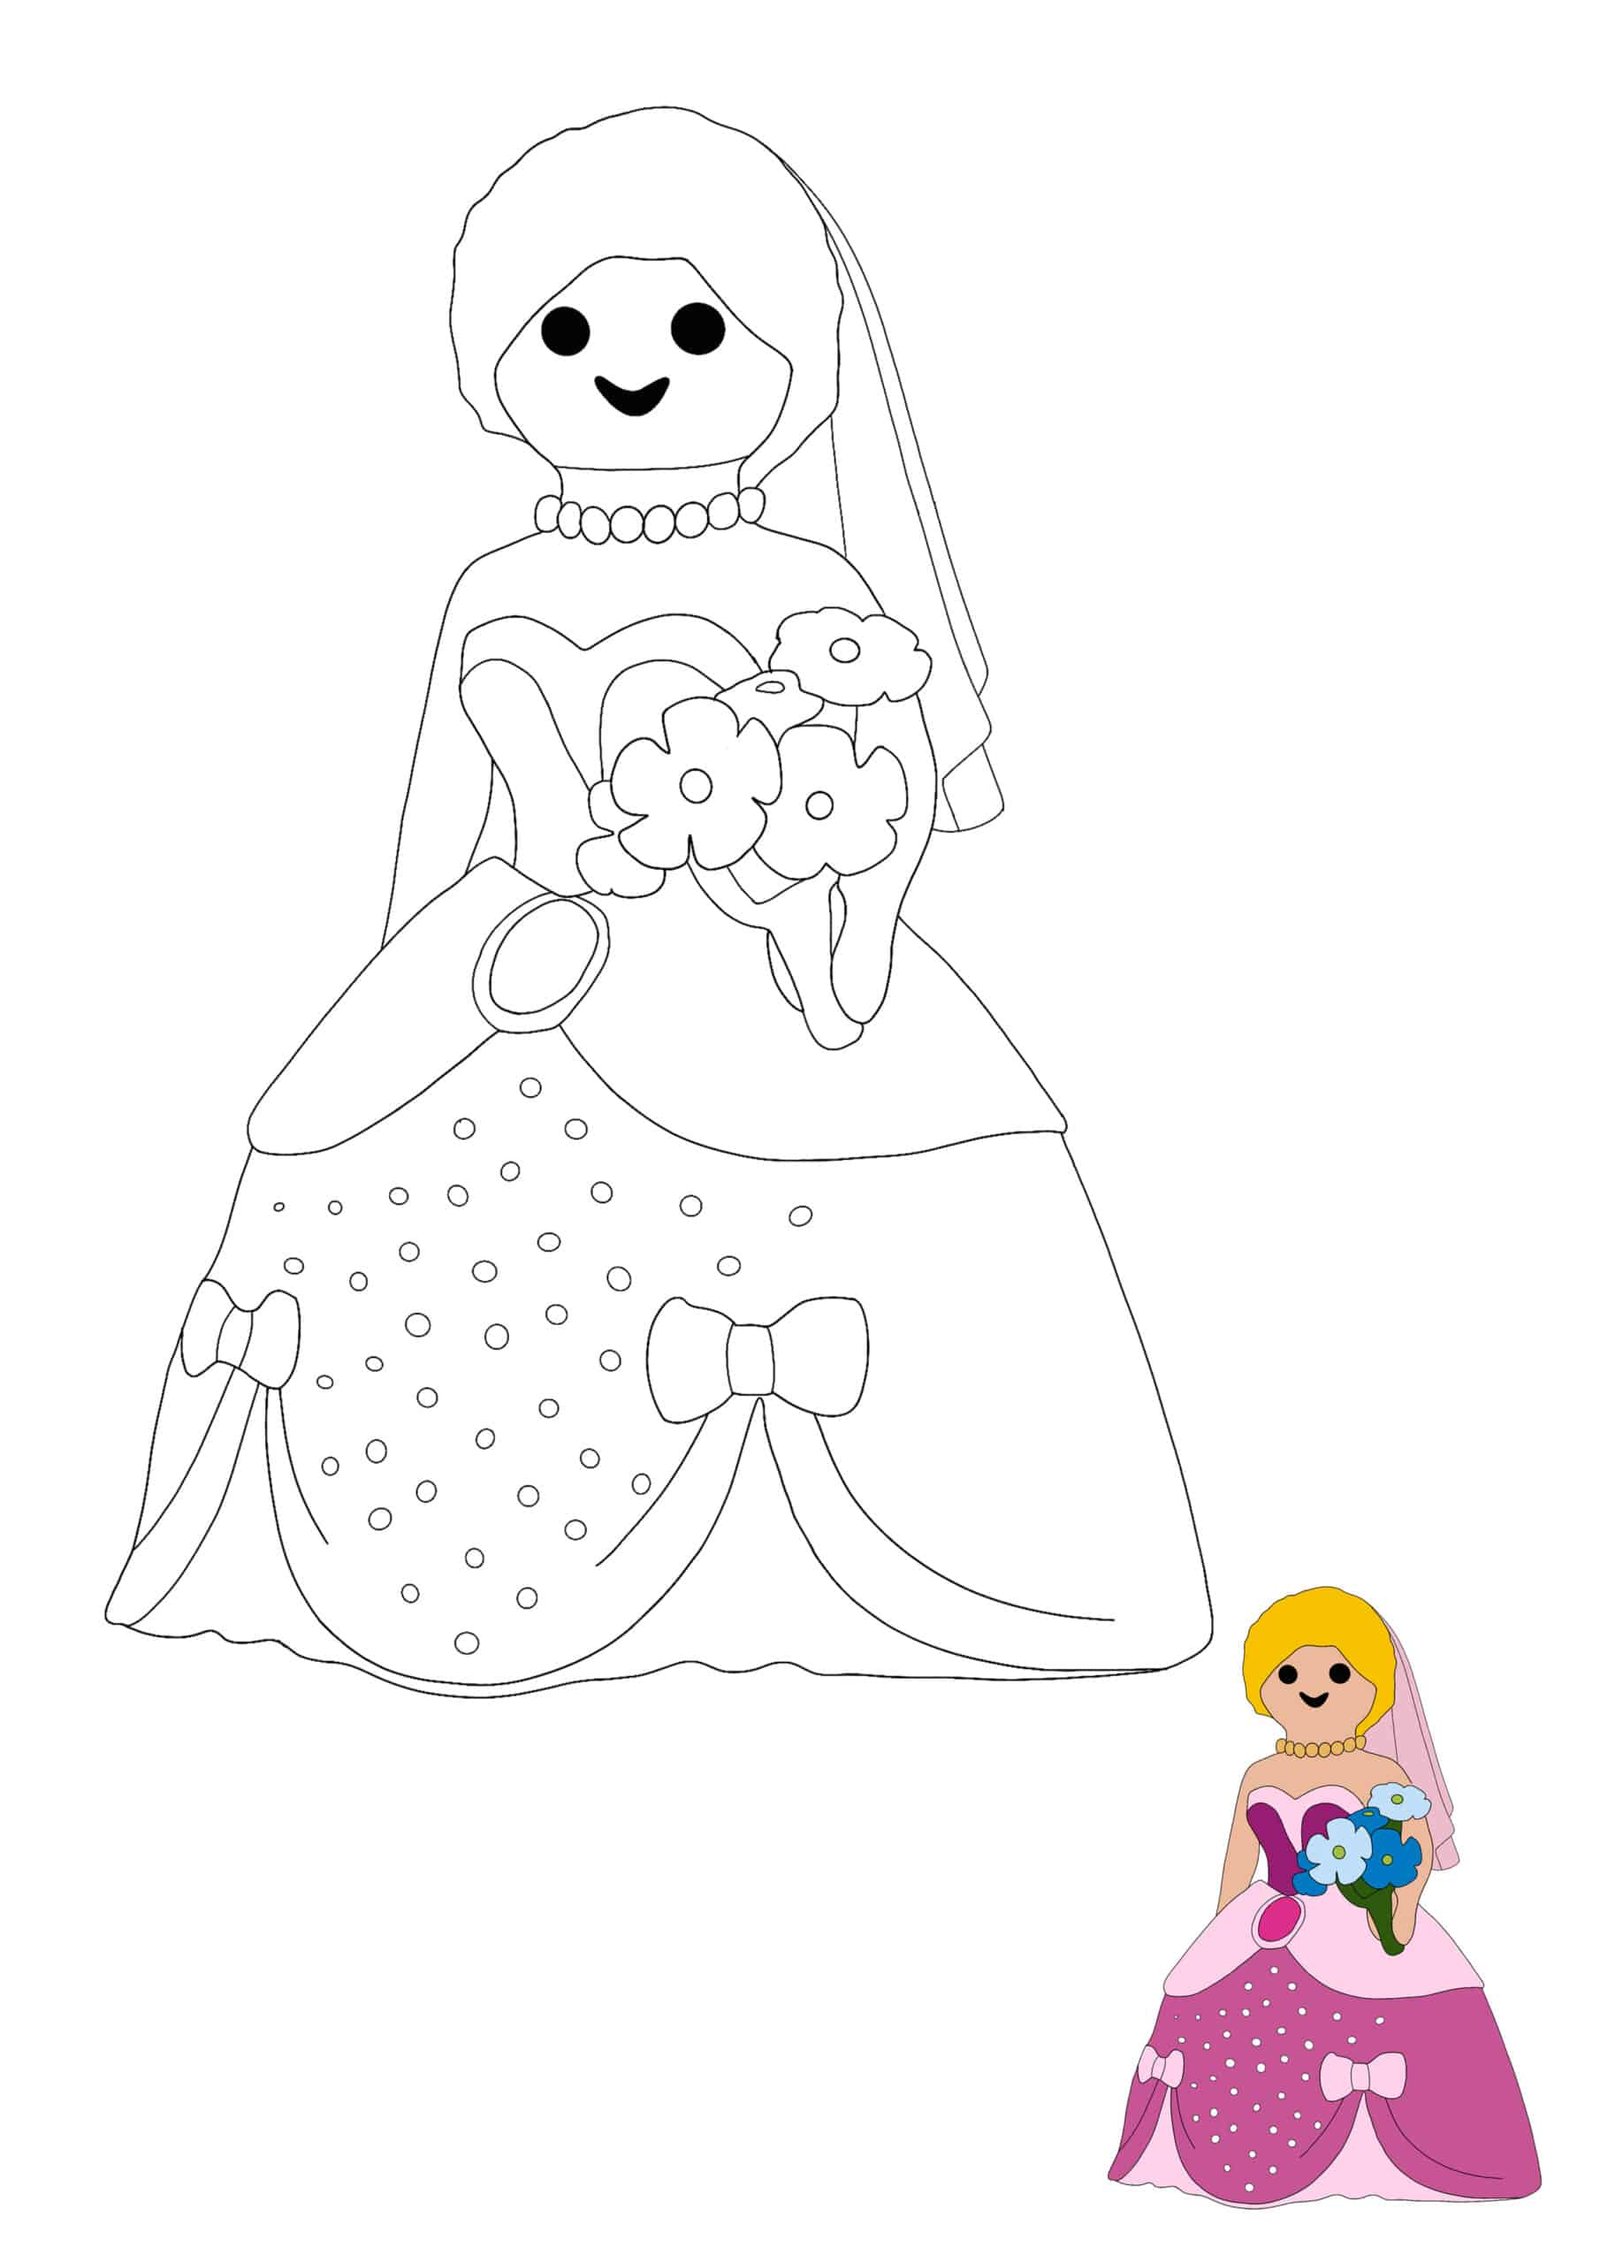 Playmobil princess coloring pages